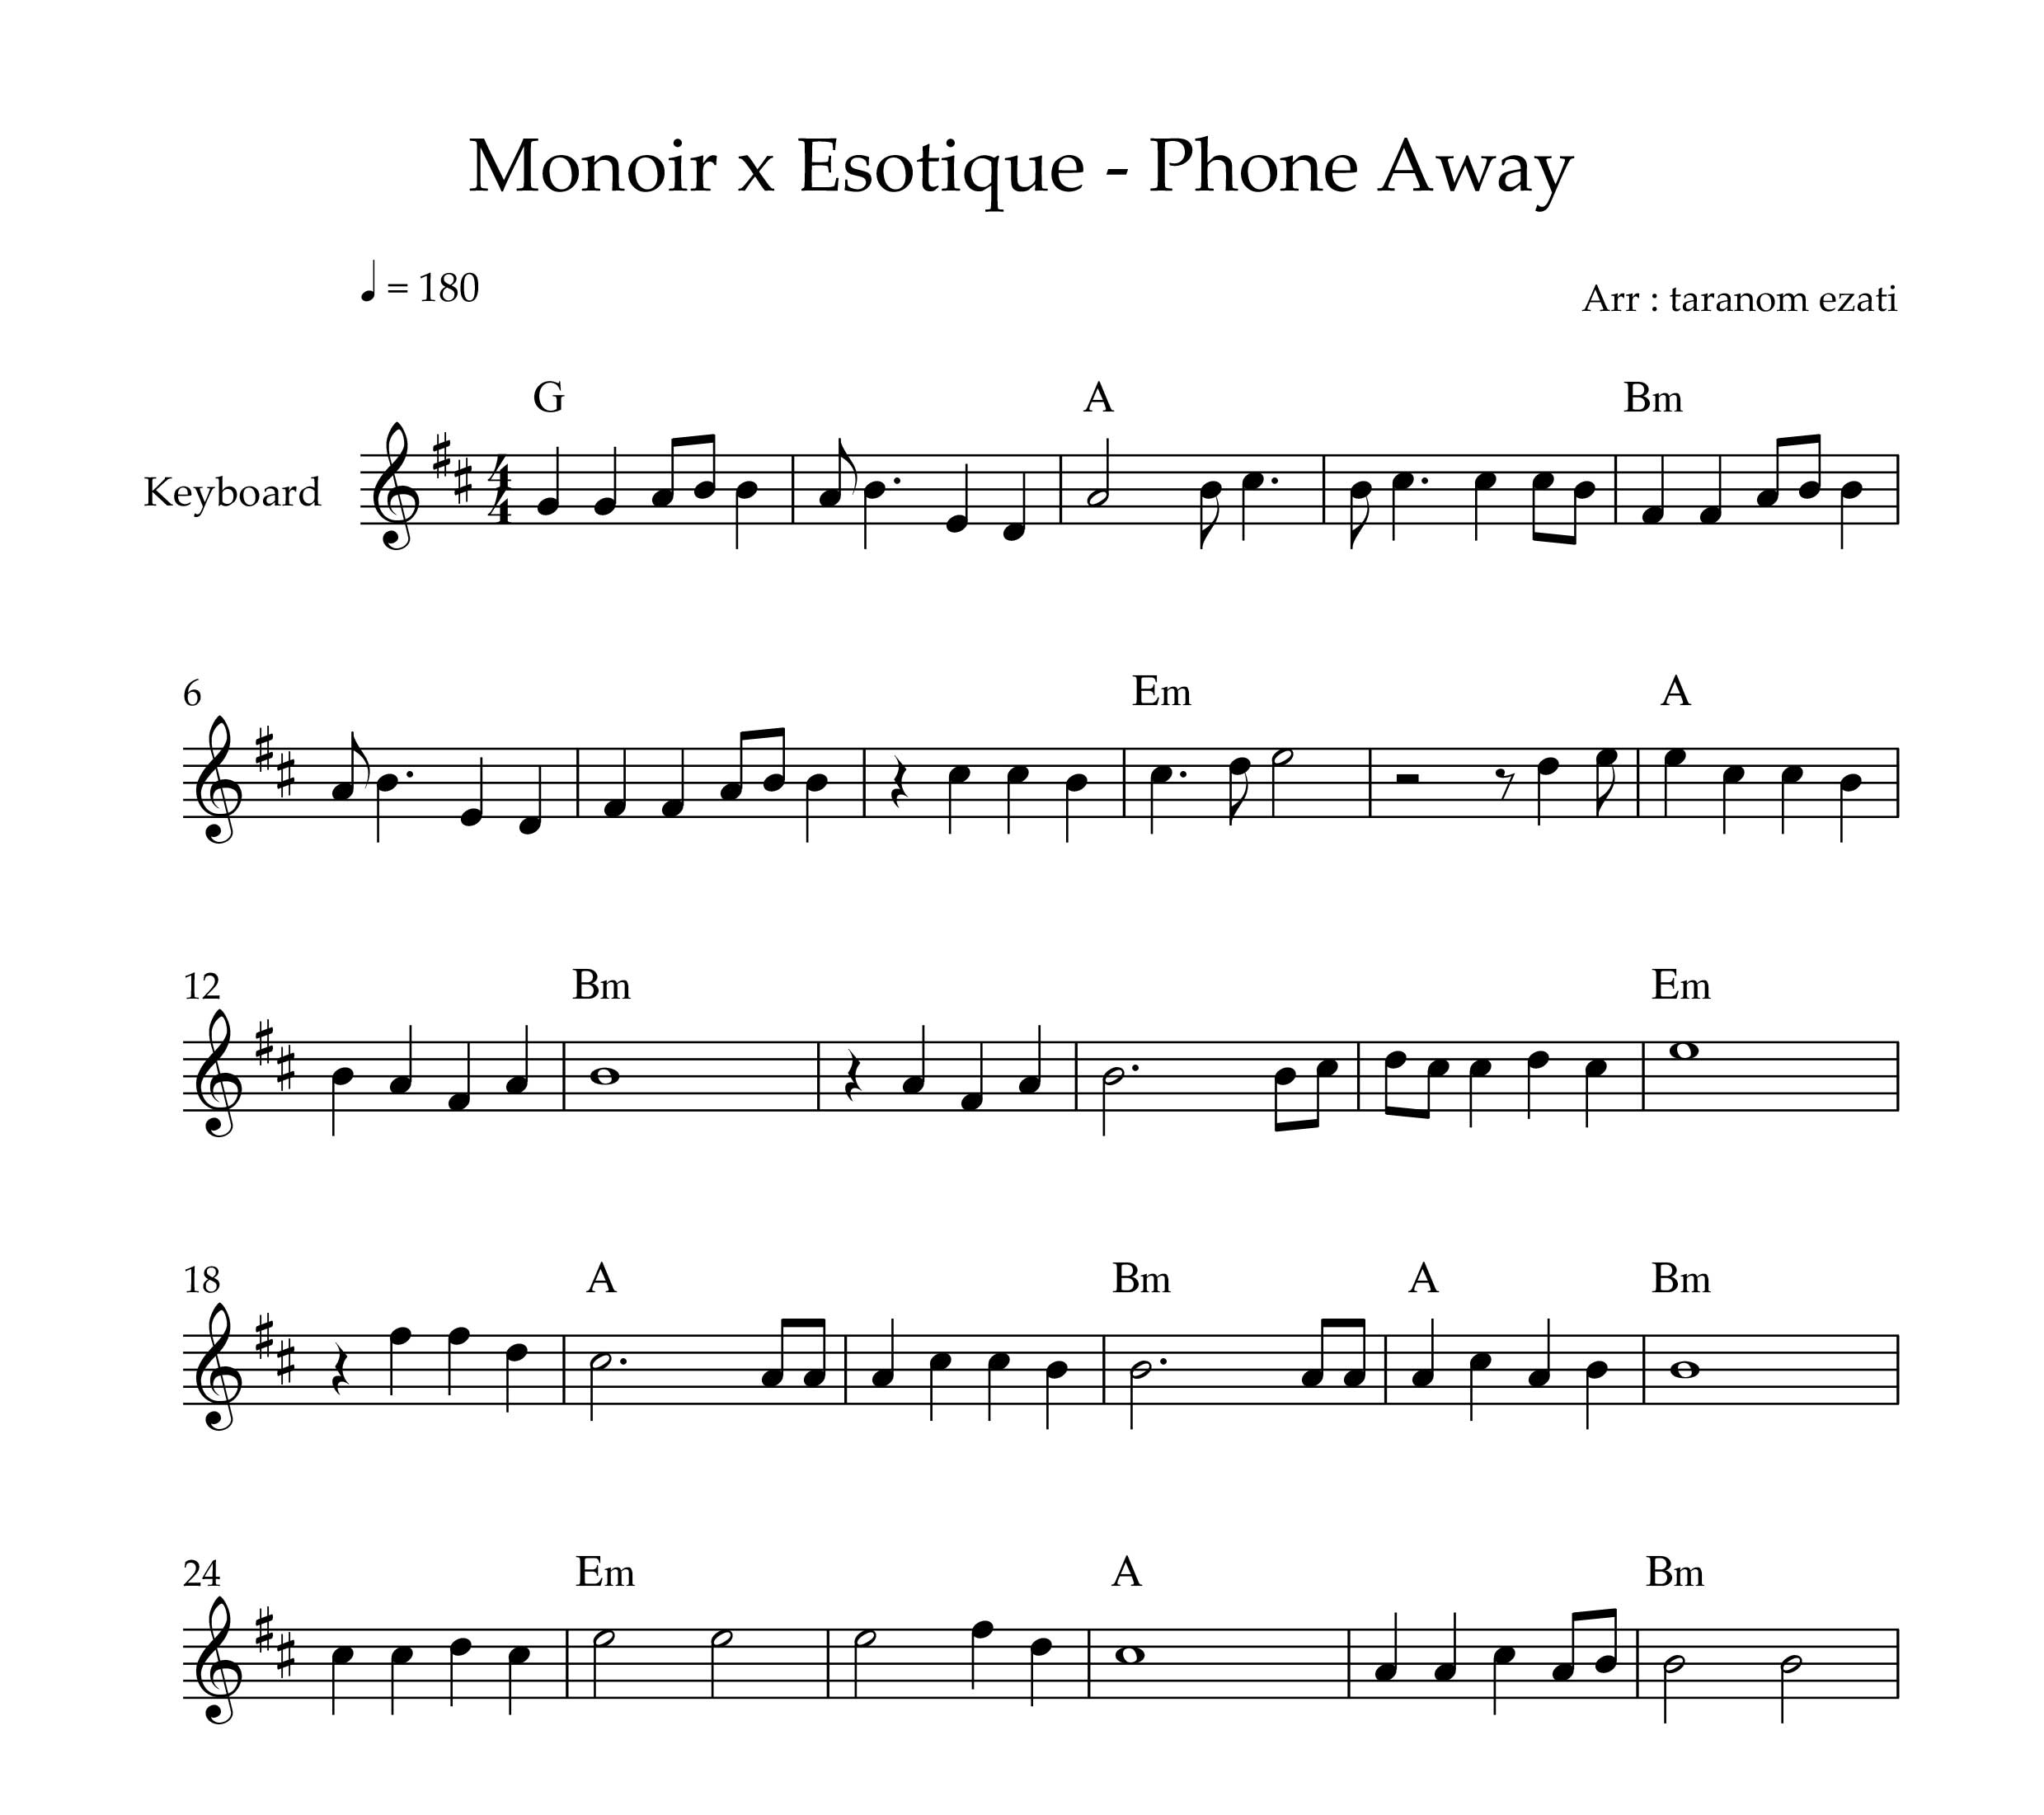 نت کیبورد phone away از monoir x esotique به همراه آکورد